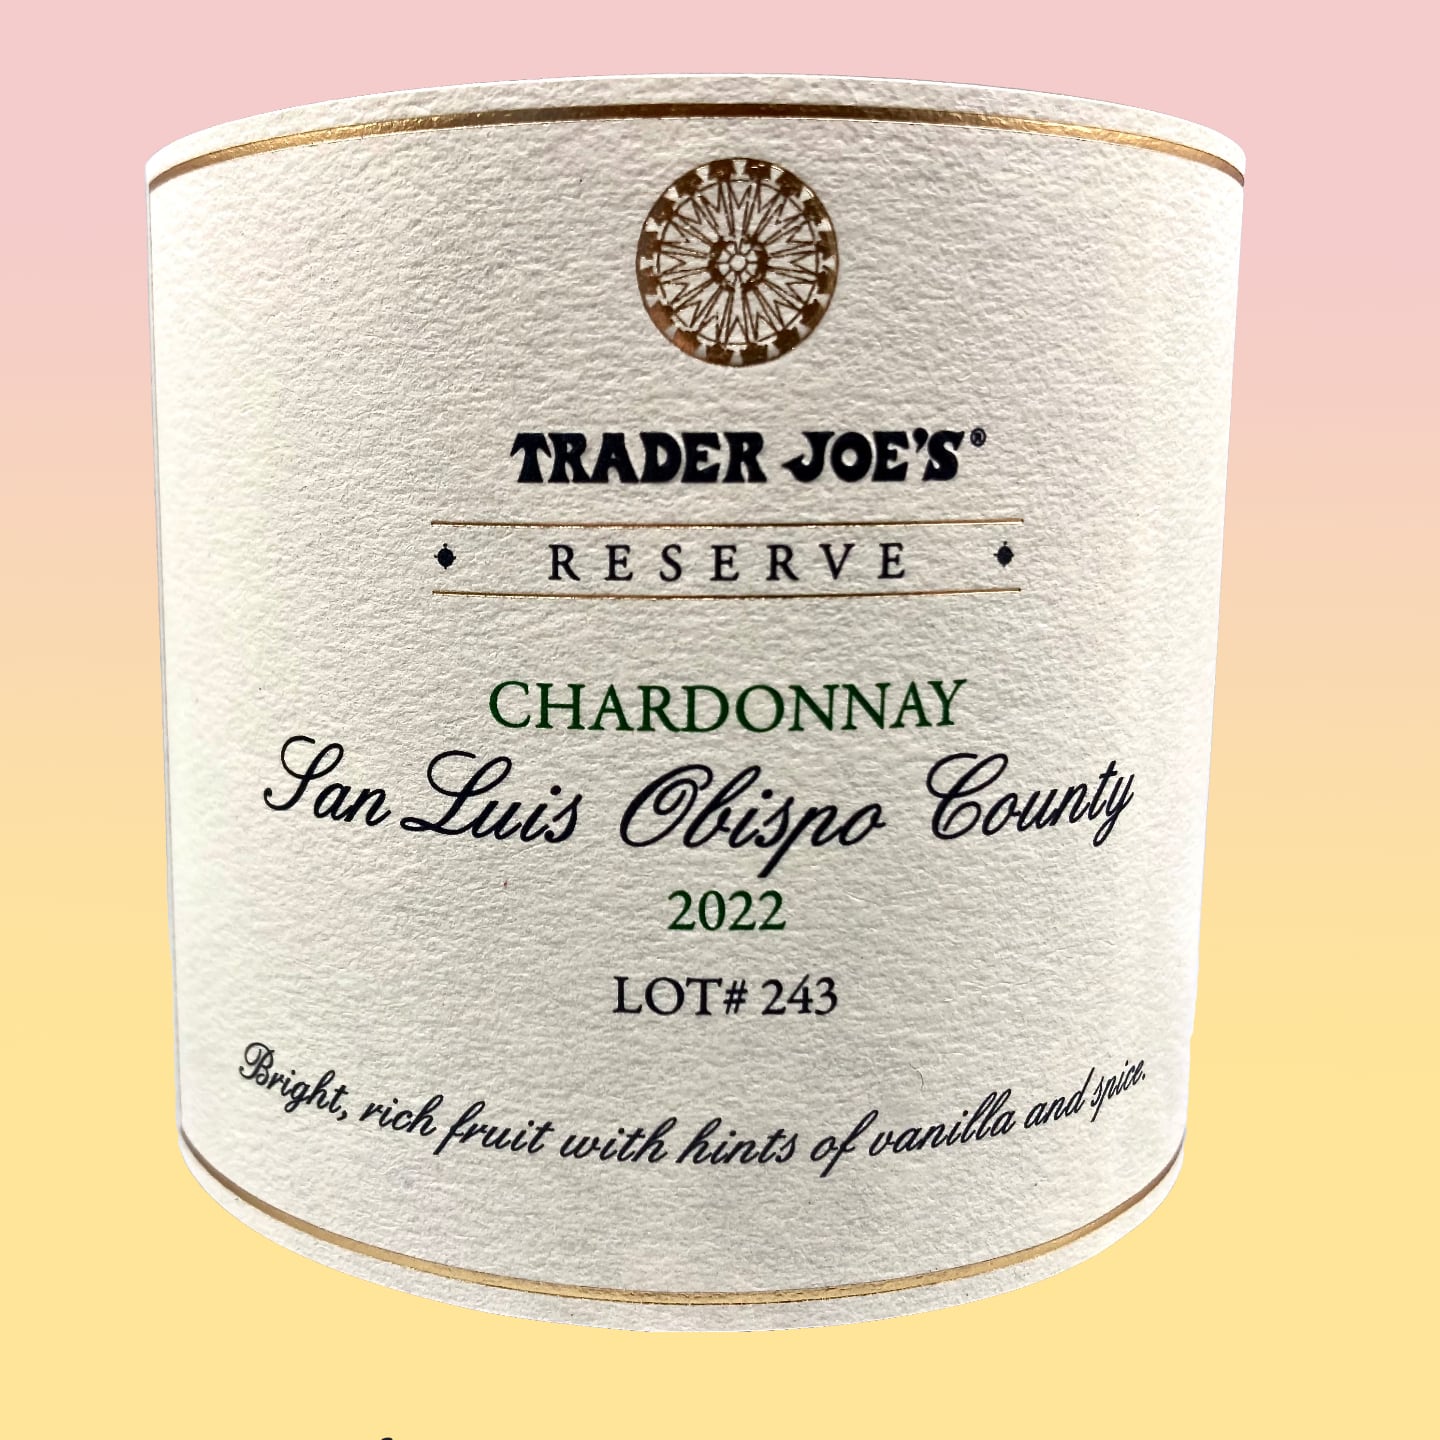 Trader Joe's Reserve SLO County Chardonnay 2022